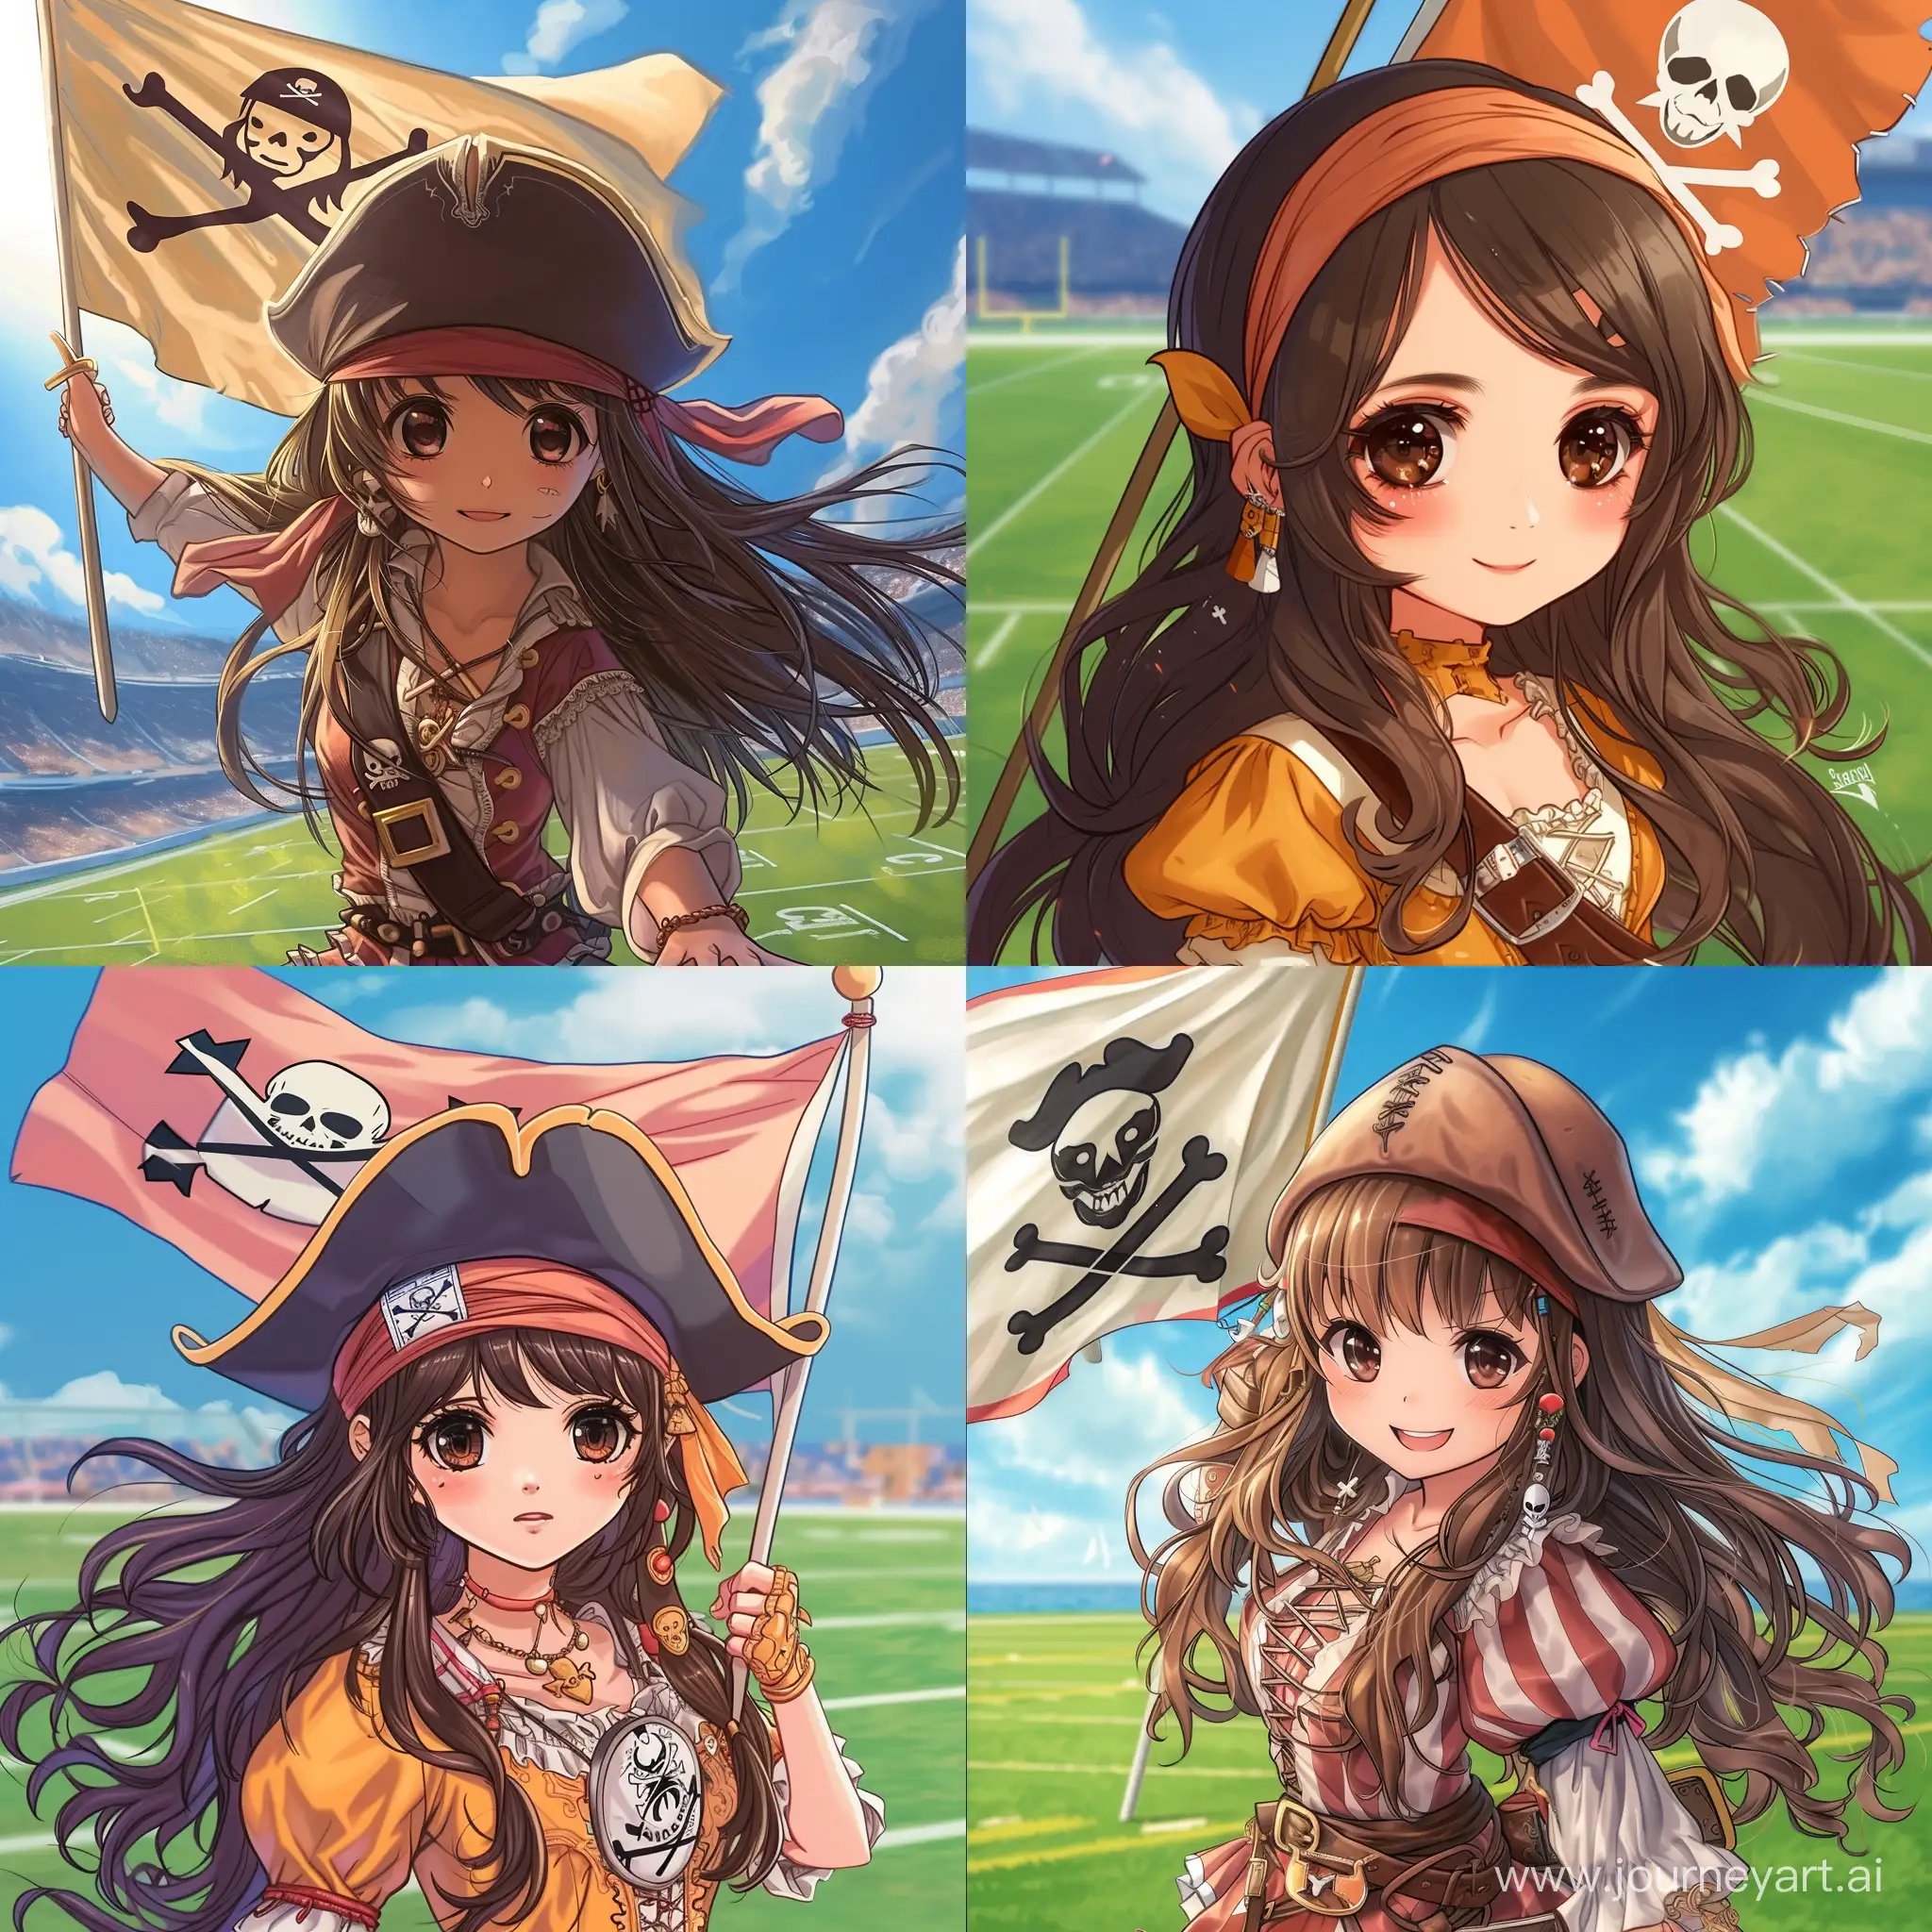 Adorable-Pirate-Girl-Waves-Flag-on-Football-Field-Cartoon-Style-Illustration